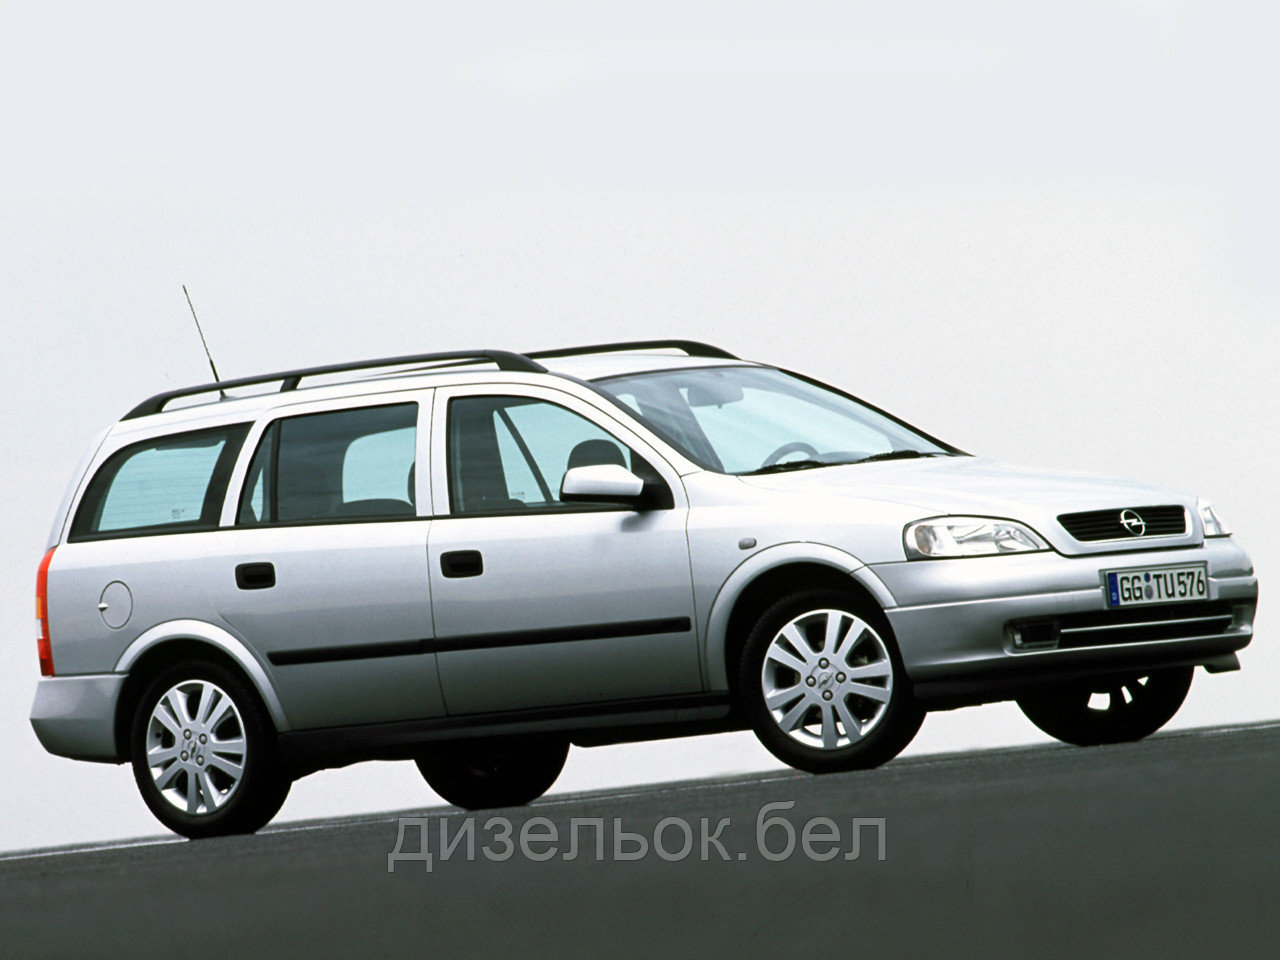 Джи караван. Opel Astra Caravan 1998. Opel Astra g 1998 универсал. Opel Astra универсал 1998. Opel Astra Caravan универсал.